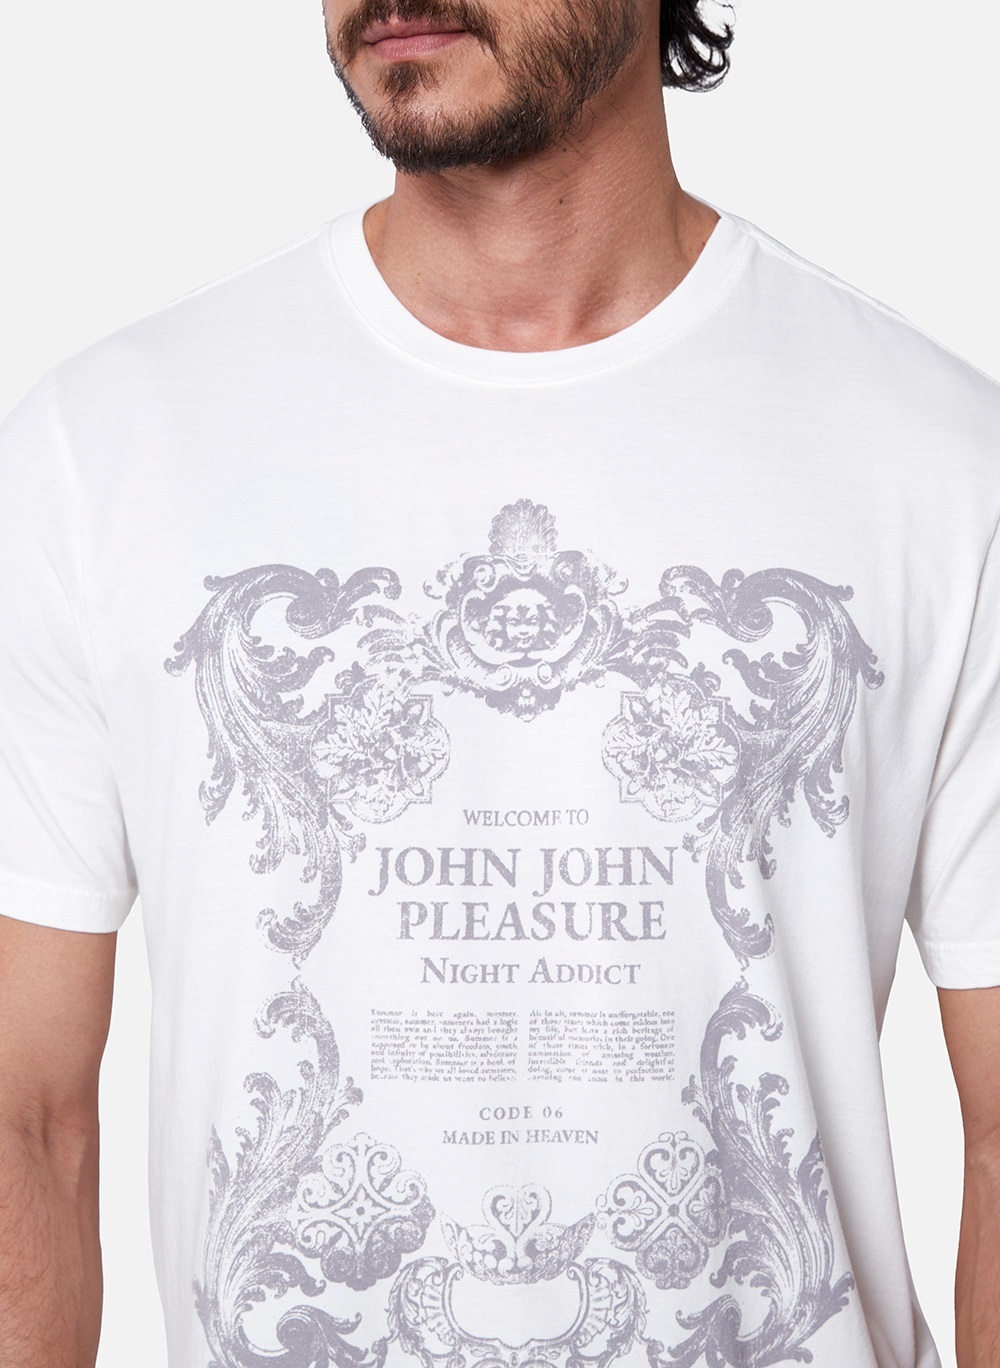 Camiseta Regular Fit Cup John John Masculina 42.54.5339 - Camiseta